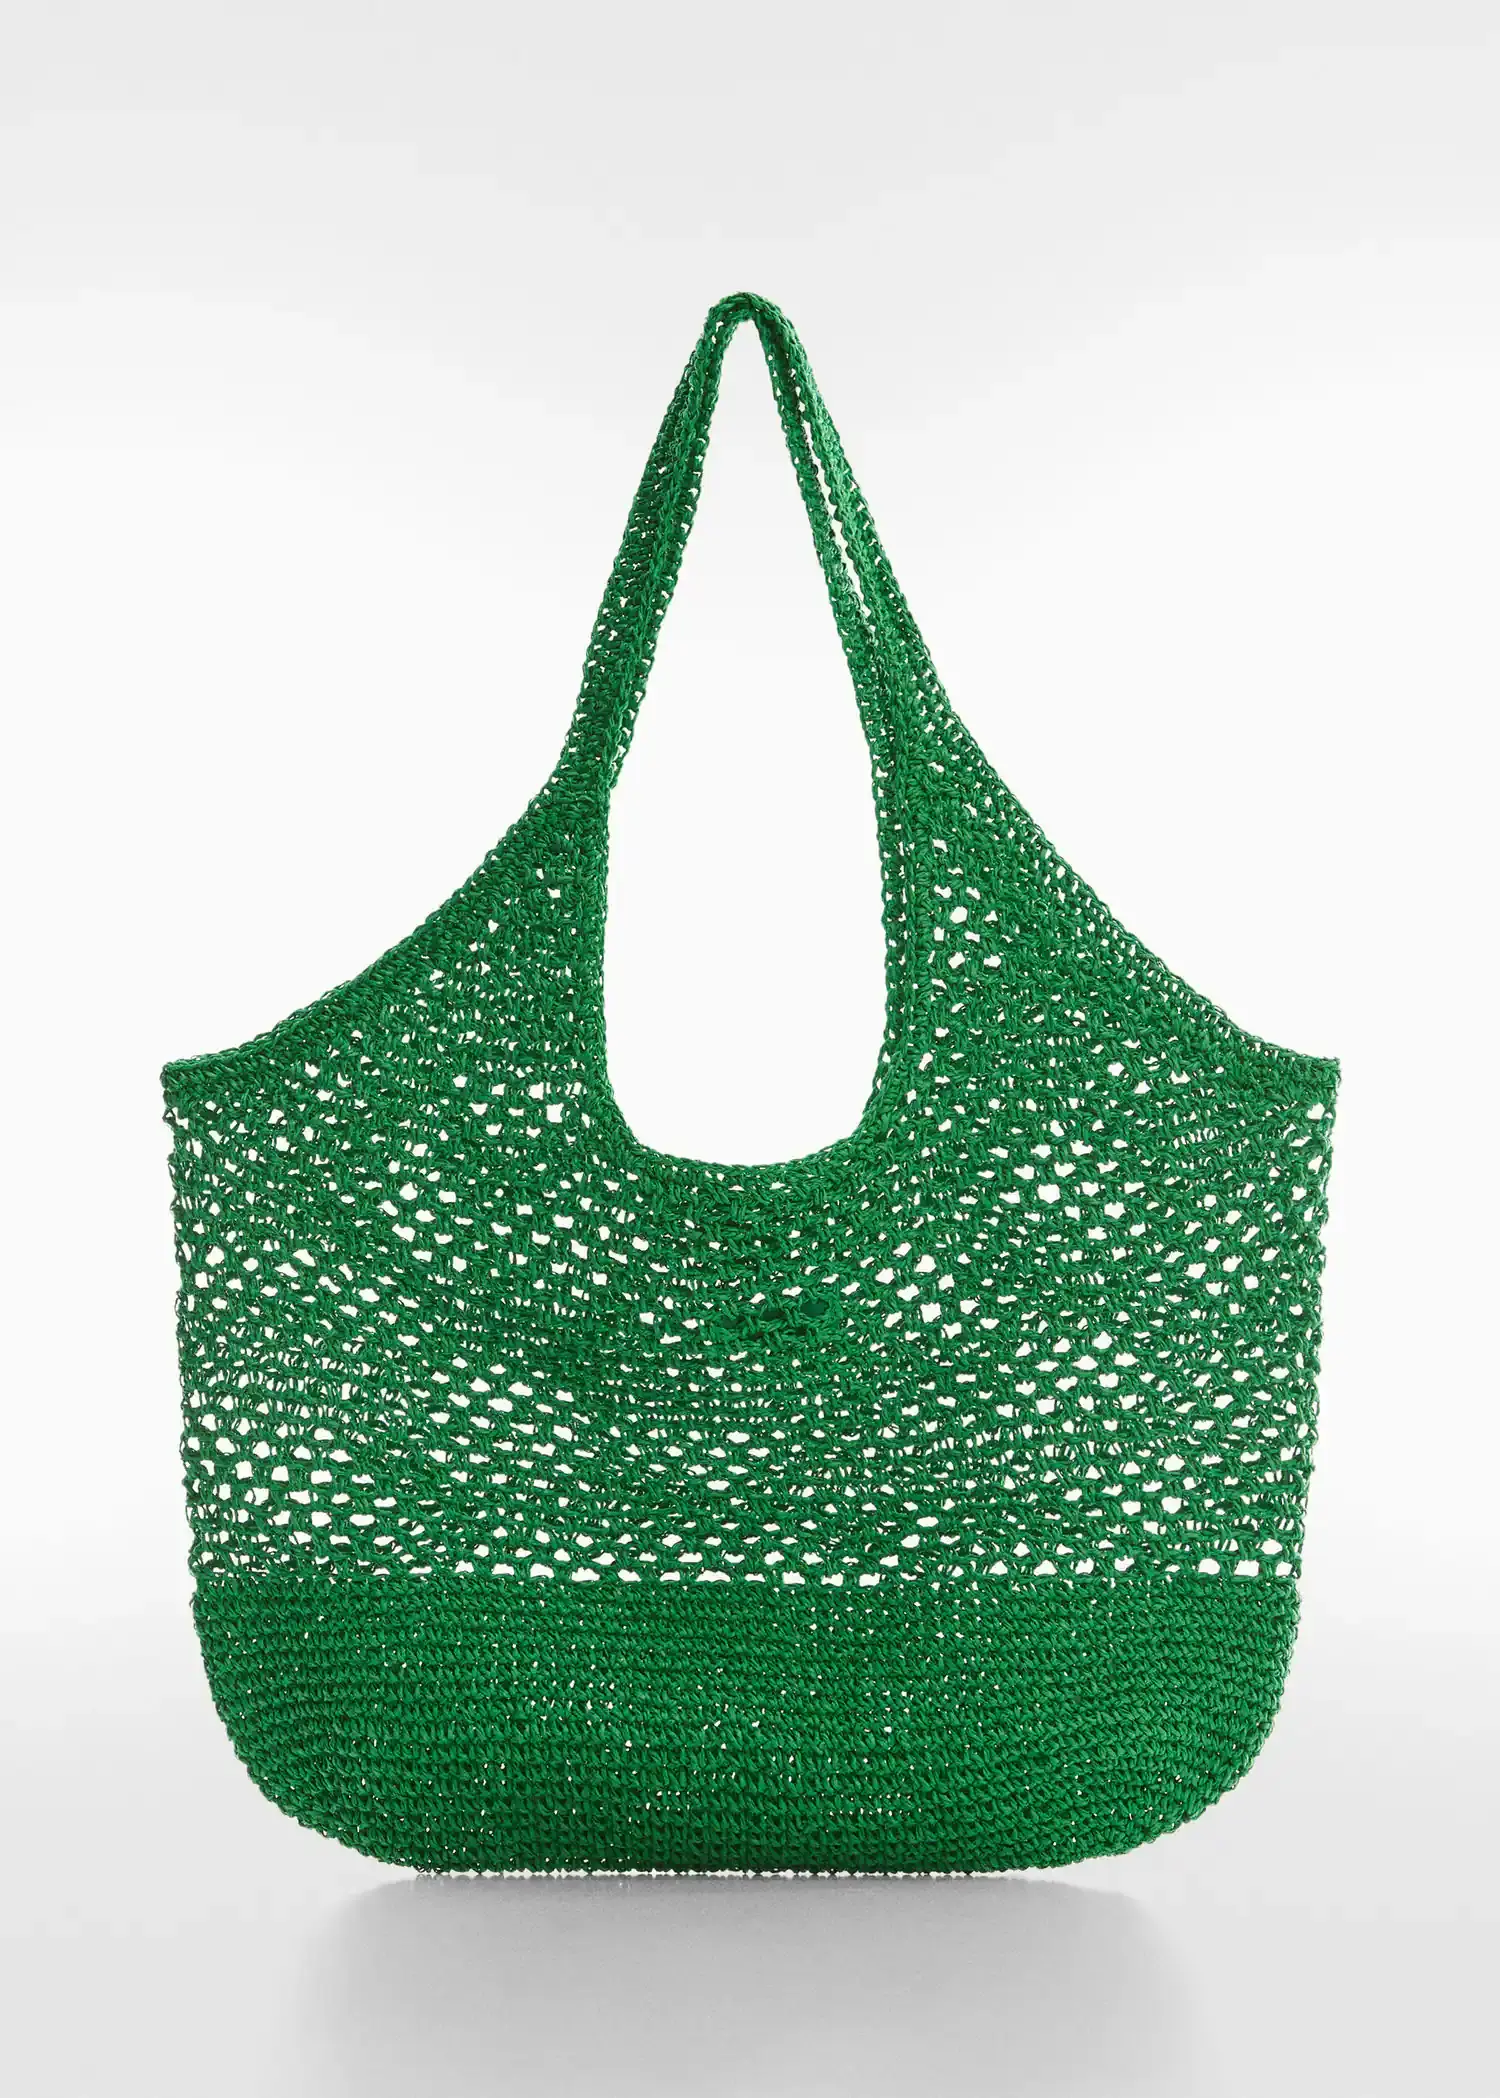 Mango Natural fiber sack bag. a crocheted green bag on a white background. 